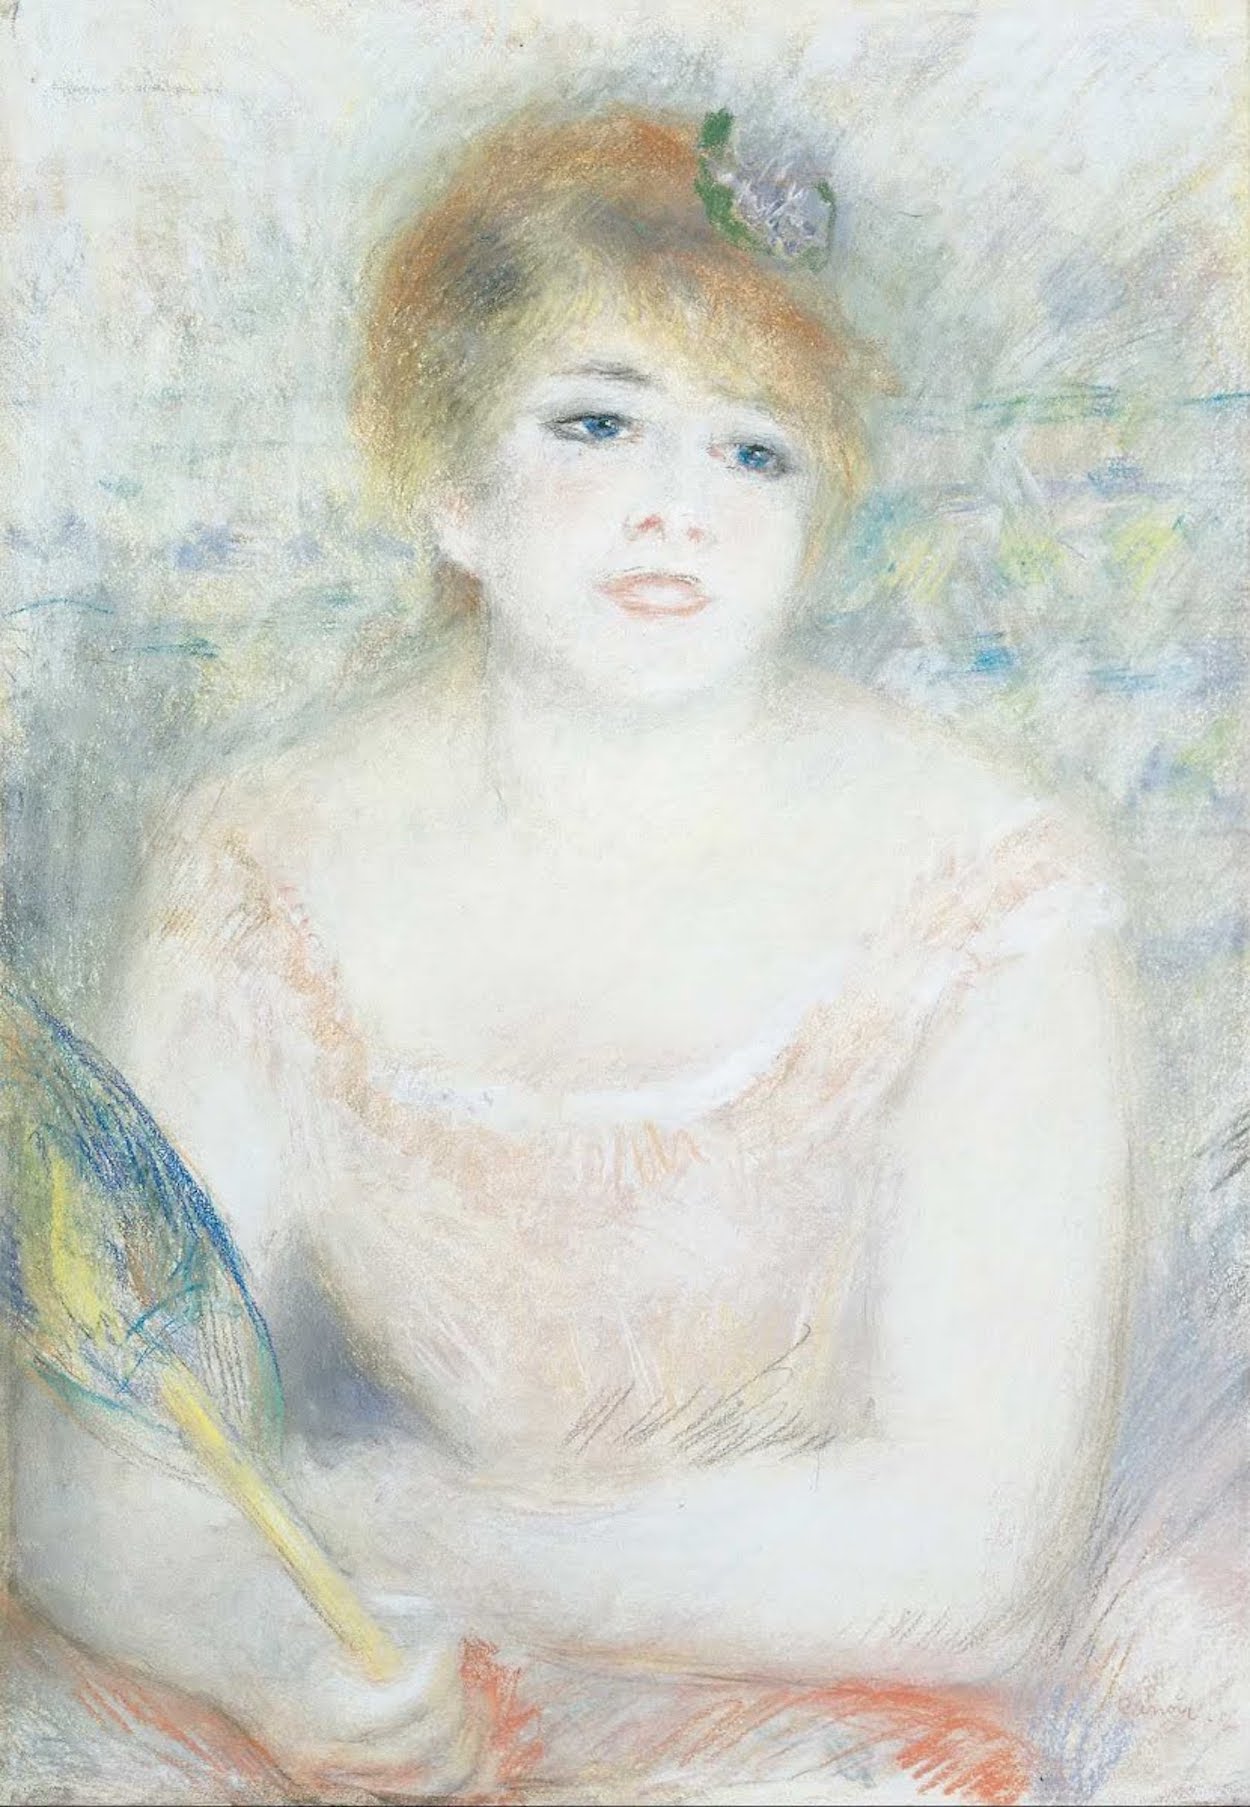 Mlle. Jeanne Samary by Pierre-Auguste Renoir - v. 1878 - 69.7 x 47.7 cm Cincinnati Art Museum